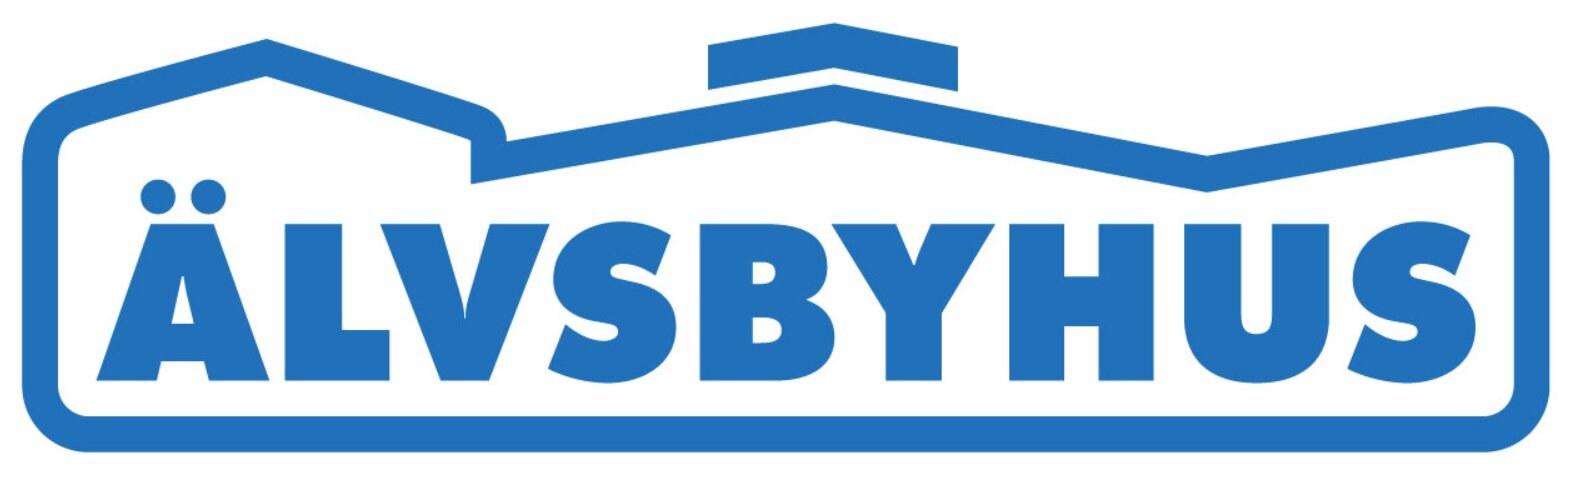 alvsbyhus logo.jpg